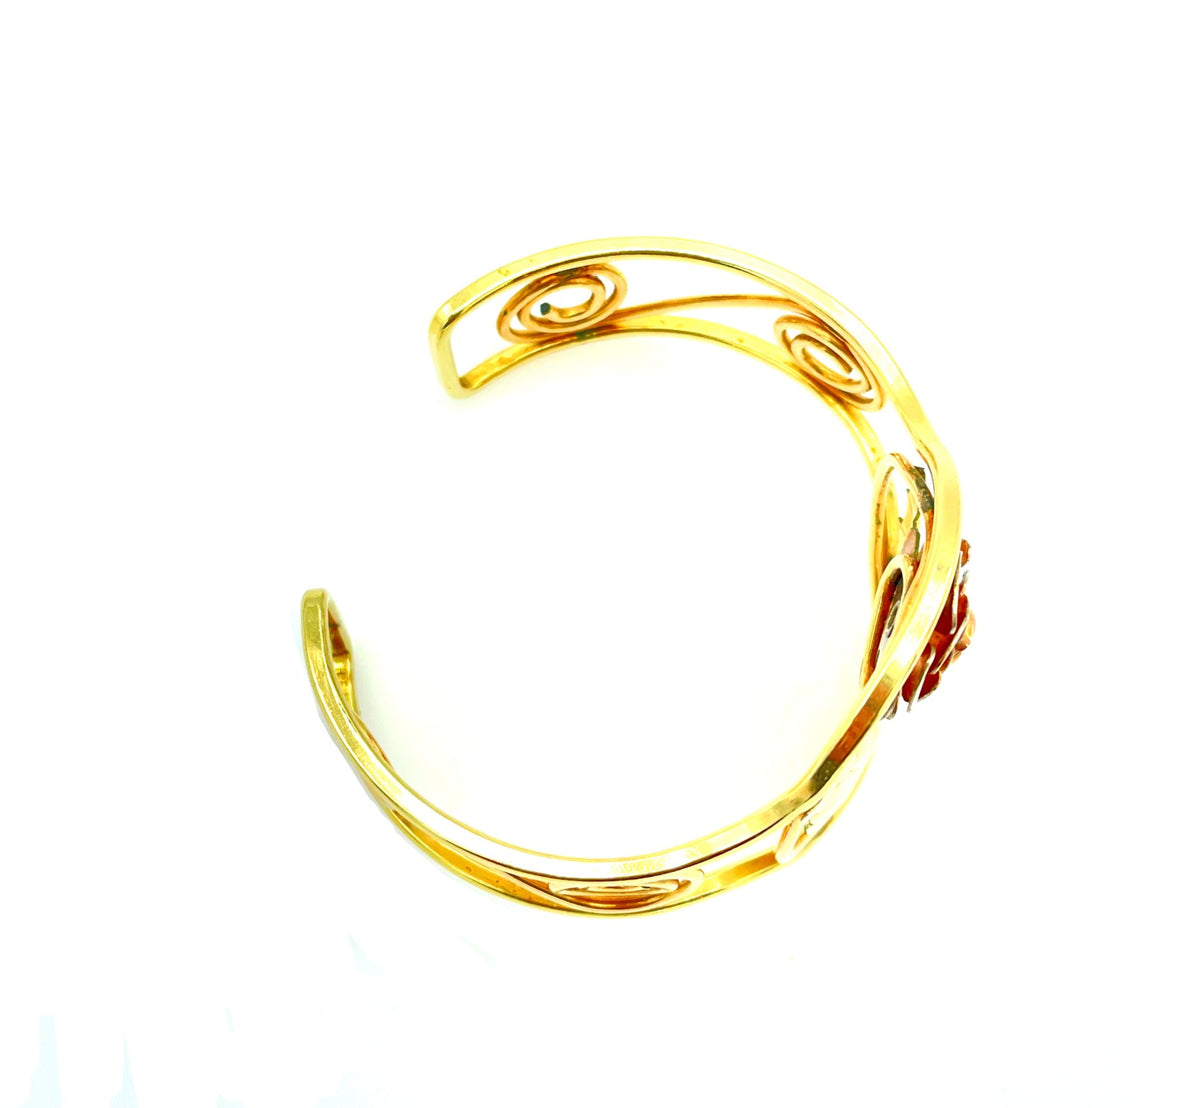 Gold Filled Floral Vintage Cuff Bracelet - 24 Wishes Vintage Jewelry